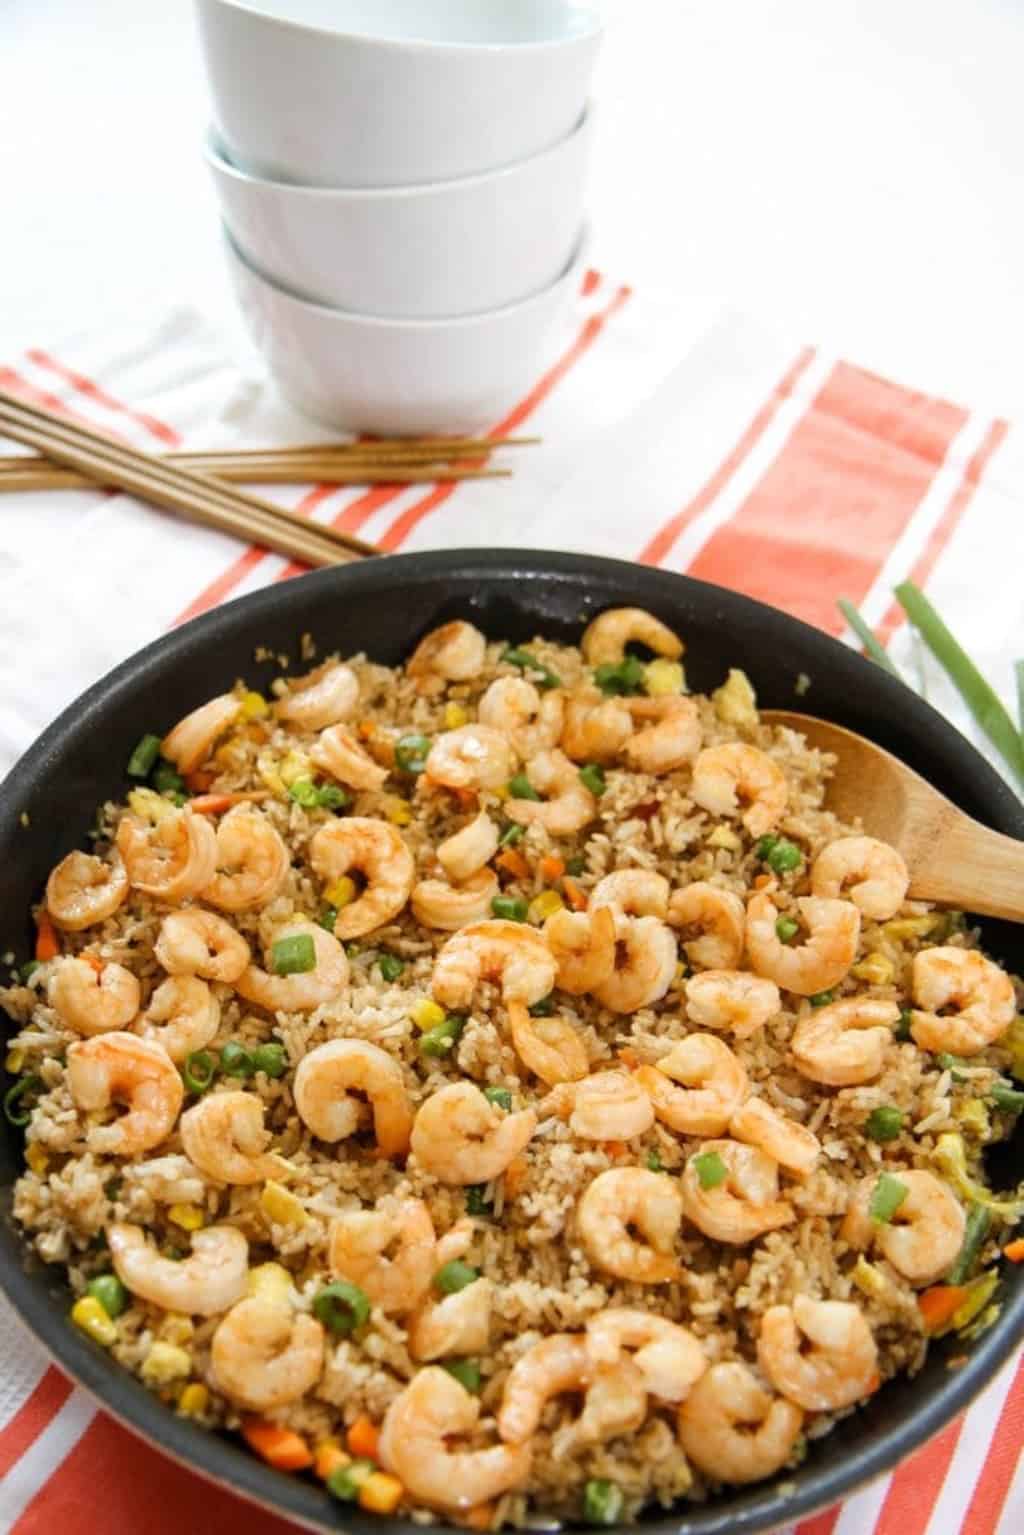 Shrimp stir fried rice recipe for meal prepping